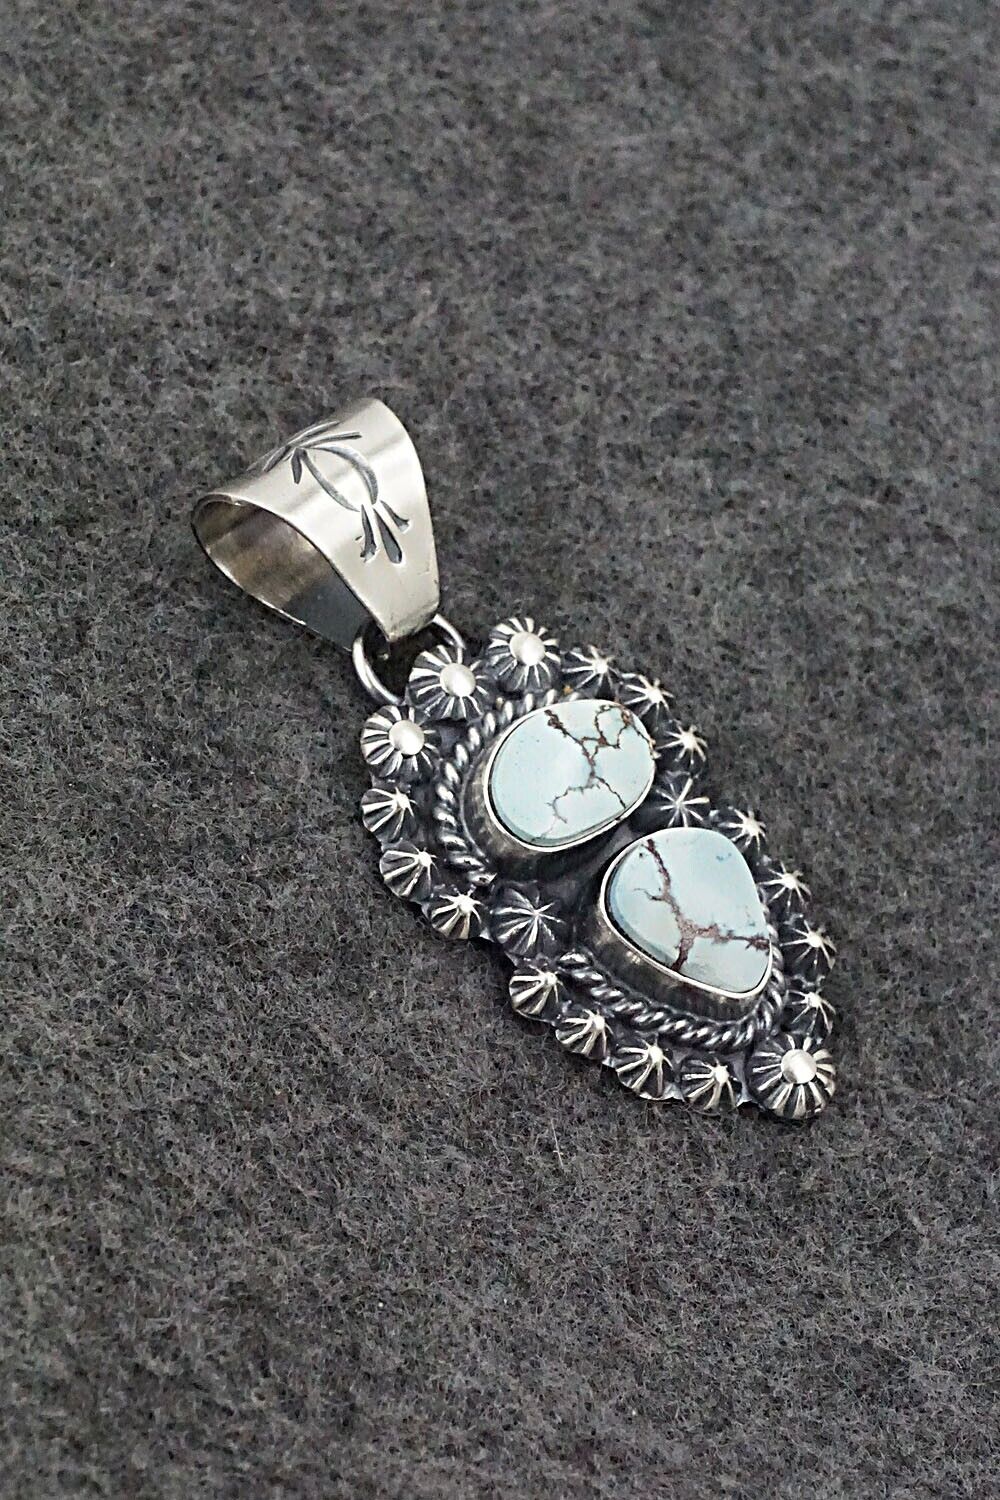 Turquoise & Sterling Silver Pendant - Raymond Delgarito